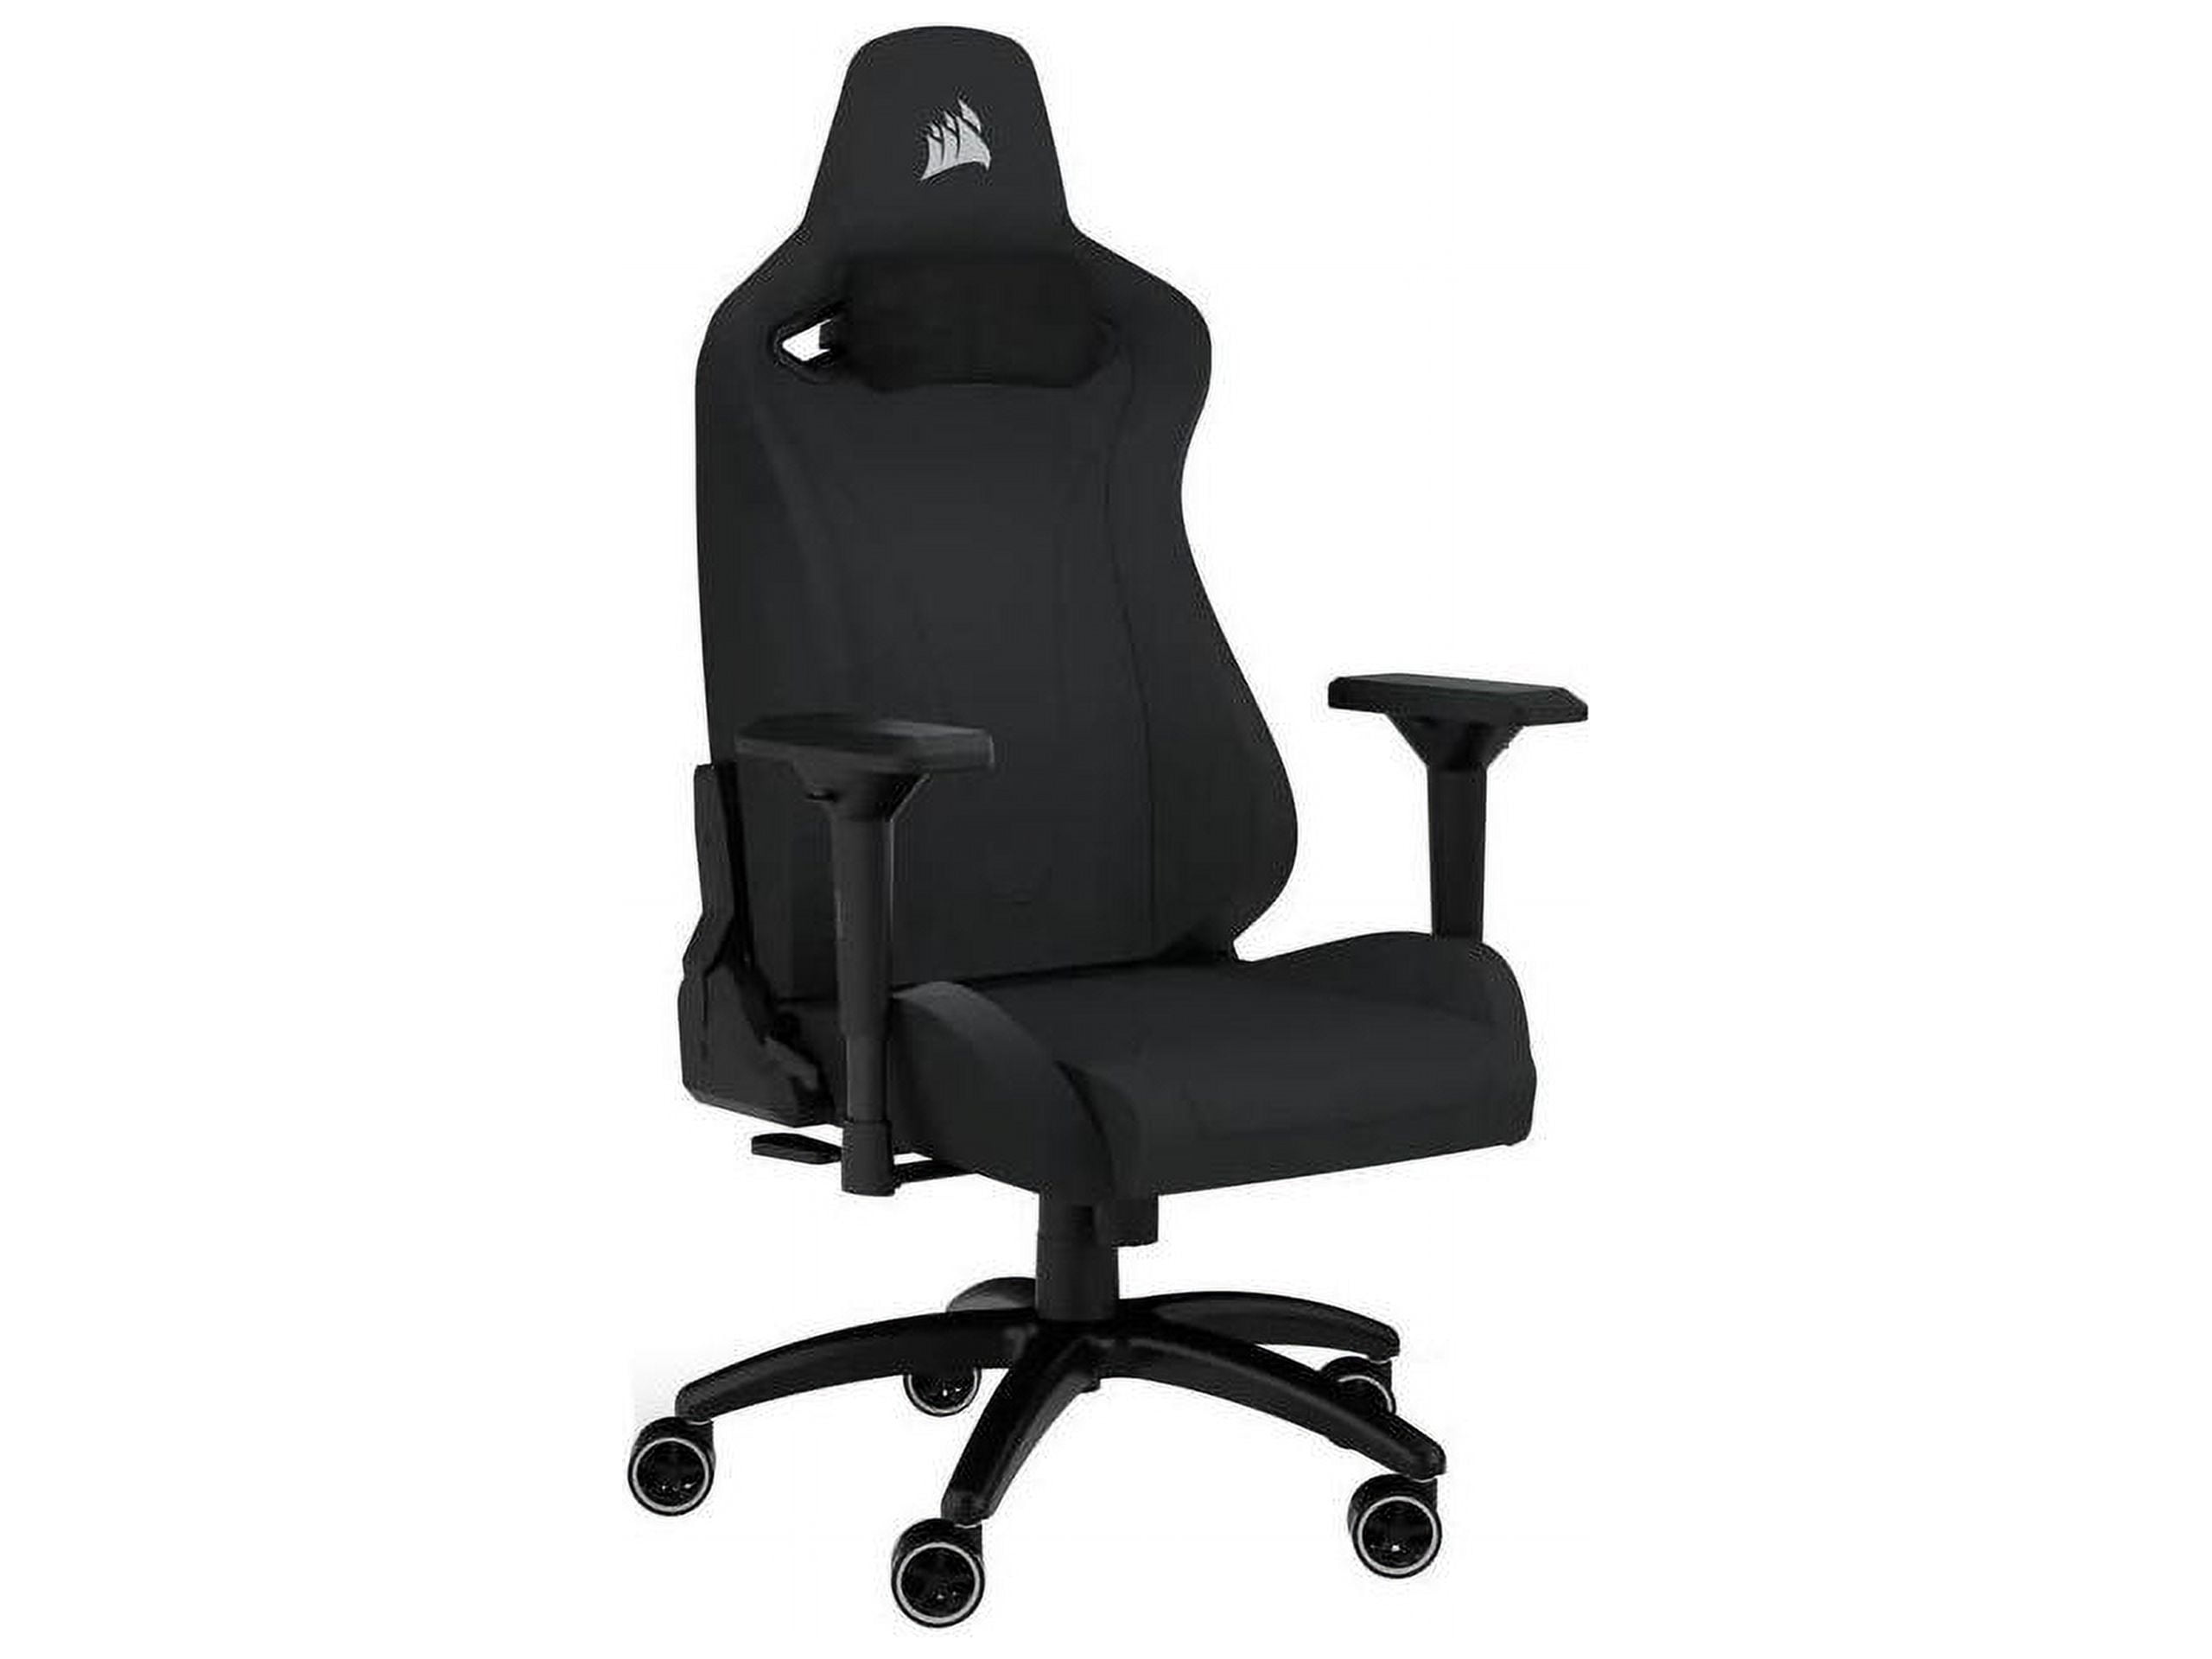 Corsair TC200 Gaming Chair - Soft Fabric - Black/Black